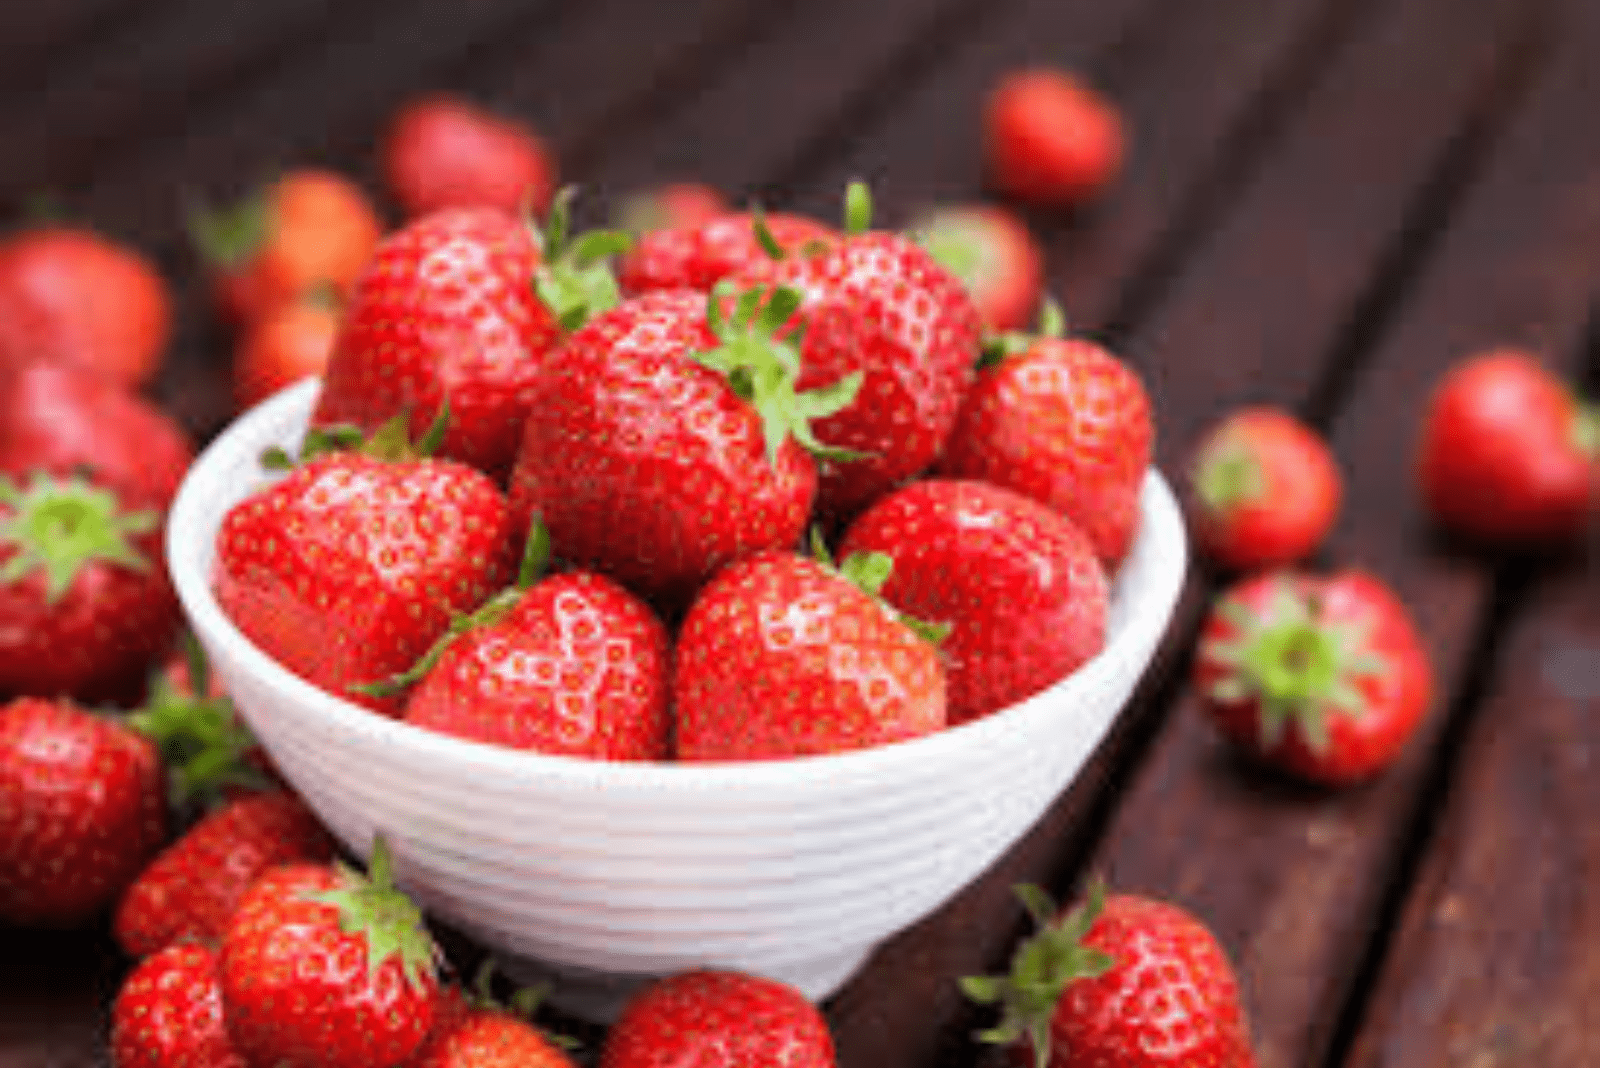 Ogallala strawberry